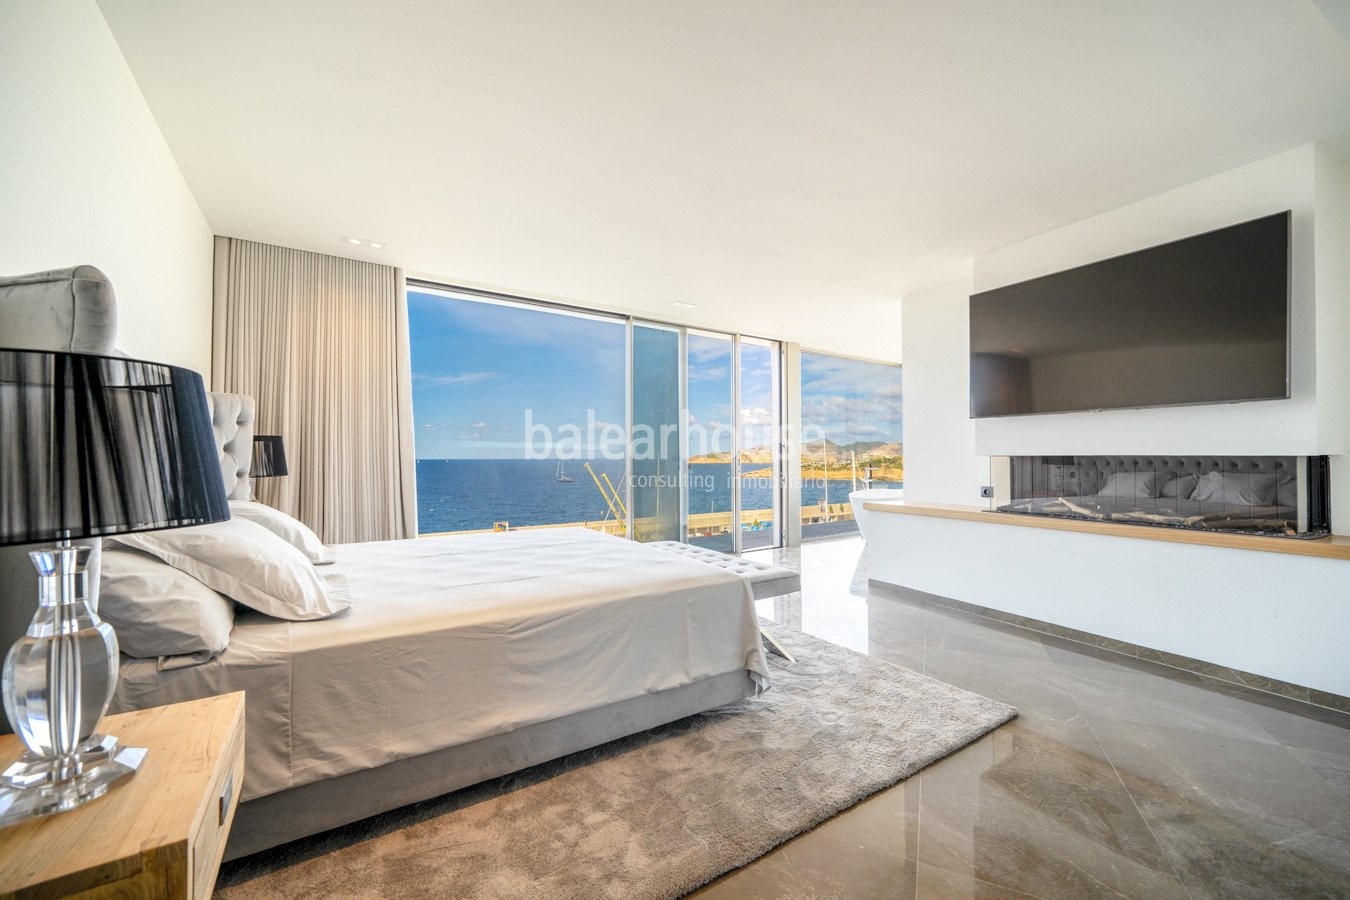 New contemporary front line villa commanding spectacular sea views in Port Adriano.